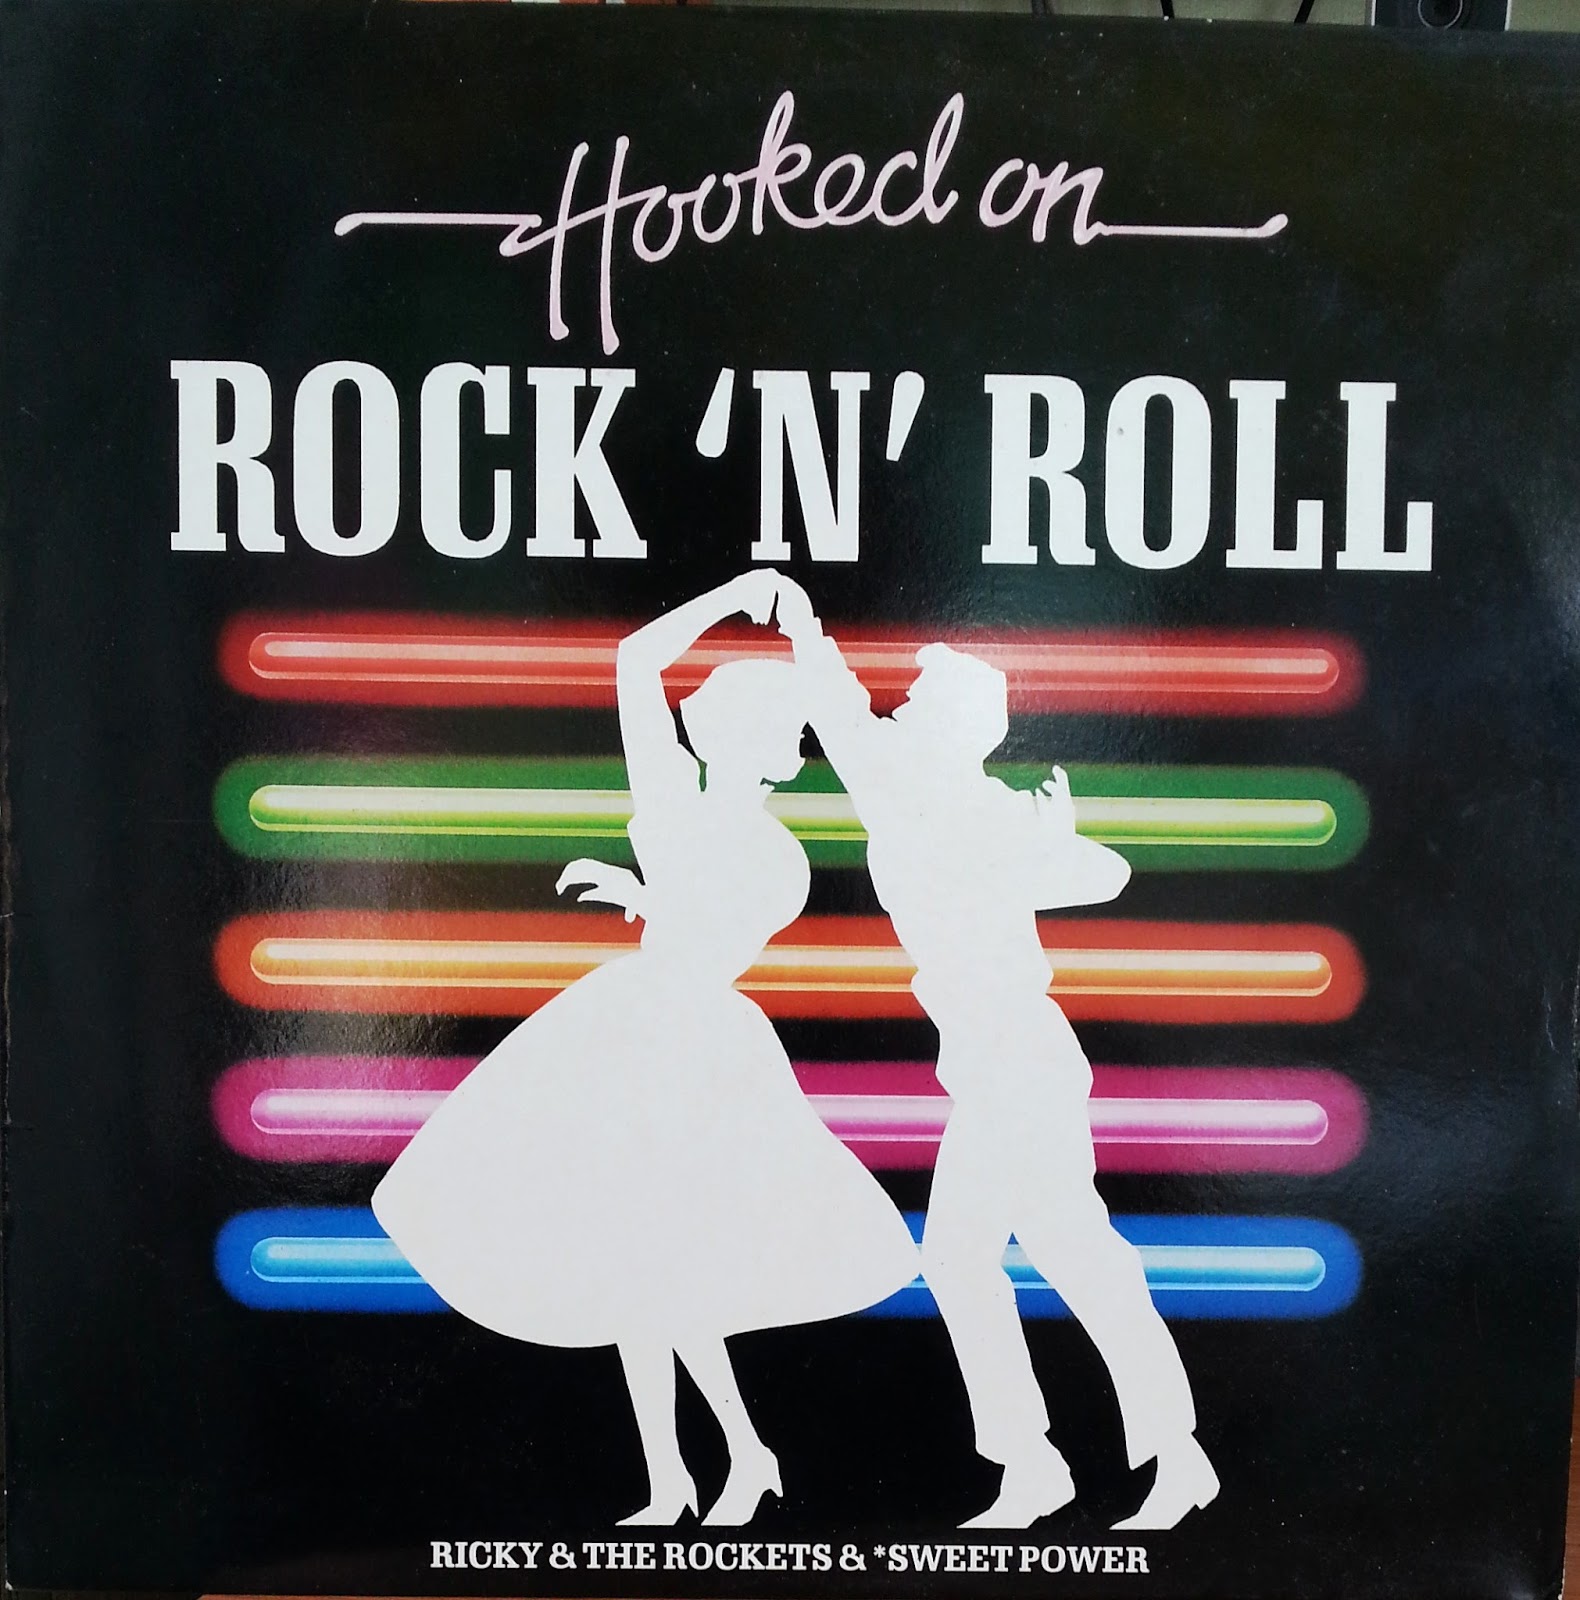 Rock i roll песня. Rock n Roll again винил. Редкие винил. Венгерский рок н ролл на виниле. Ricky King (1984) - Rock 'n' Roll Party обложка.